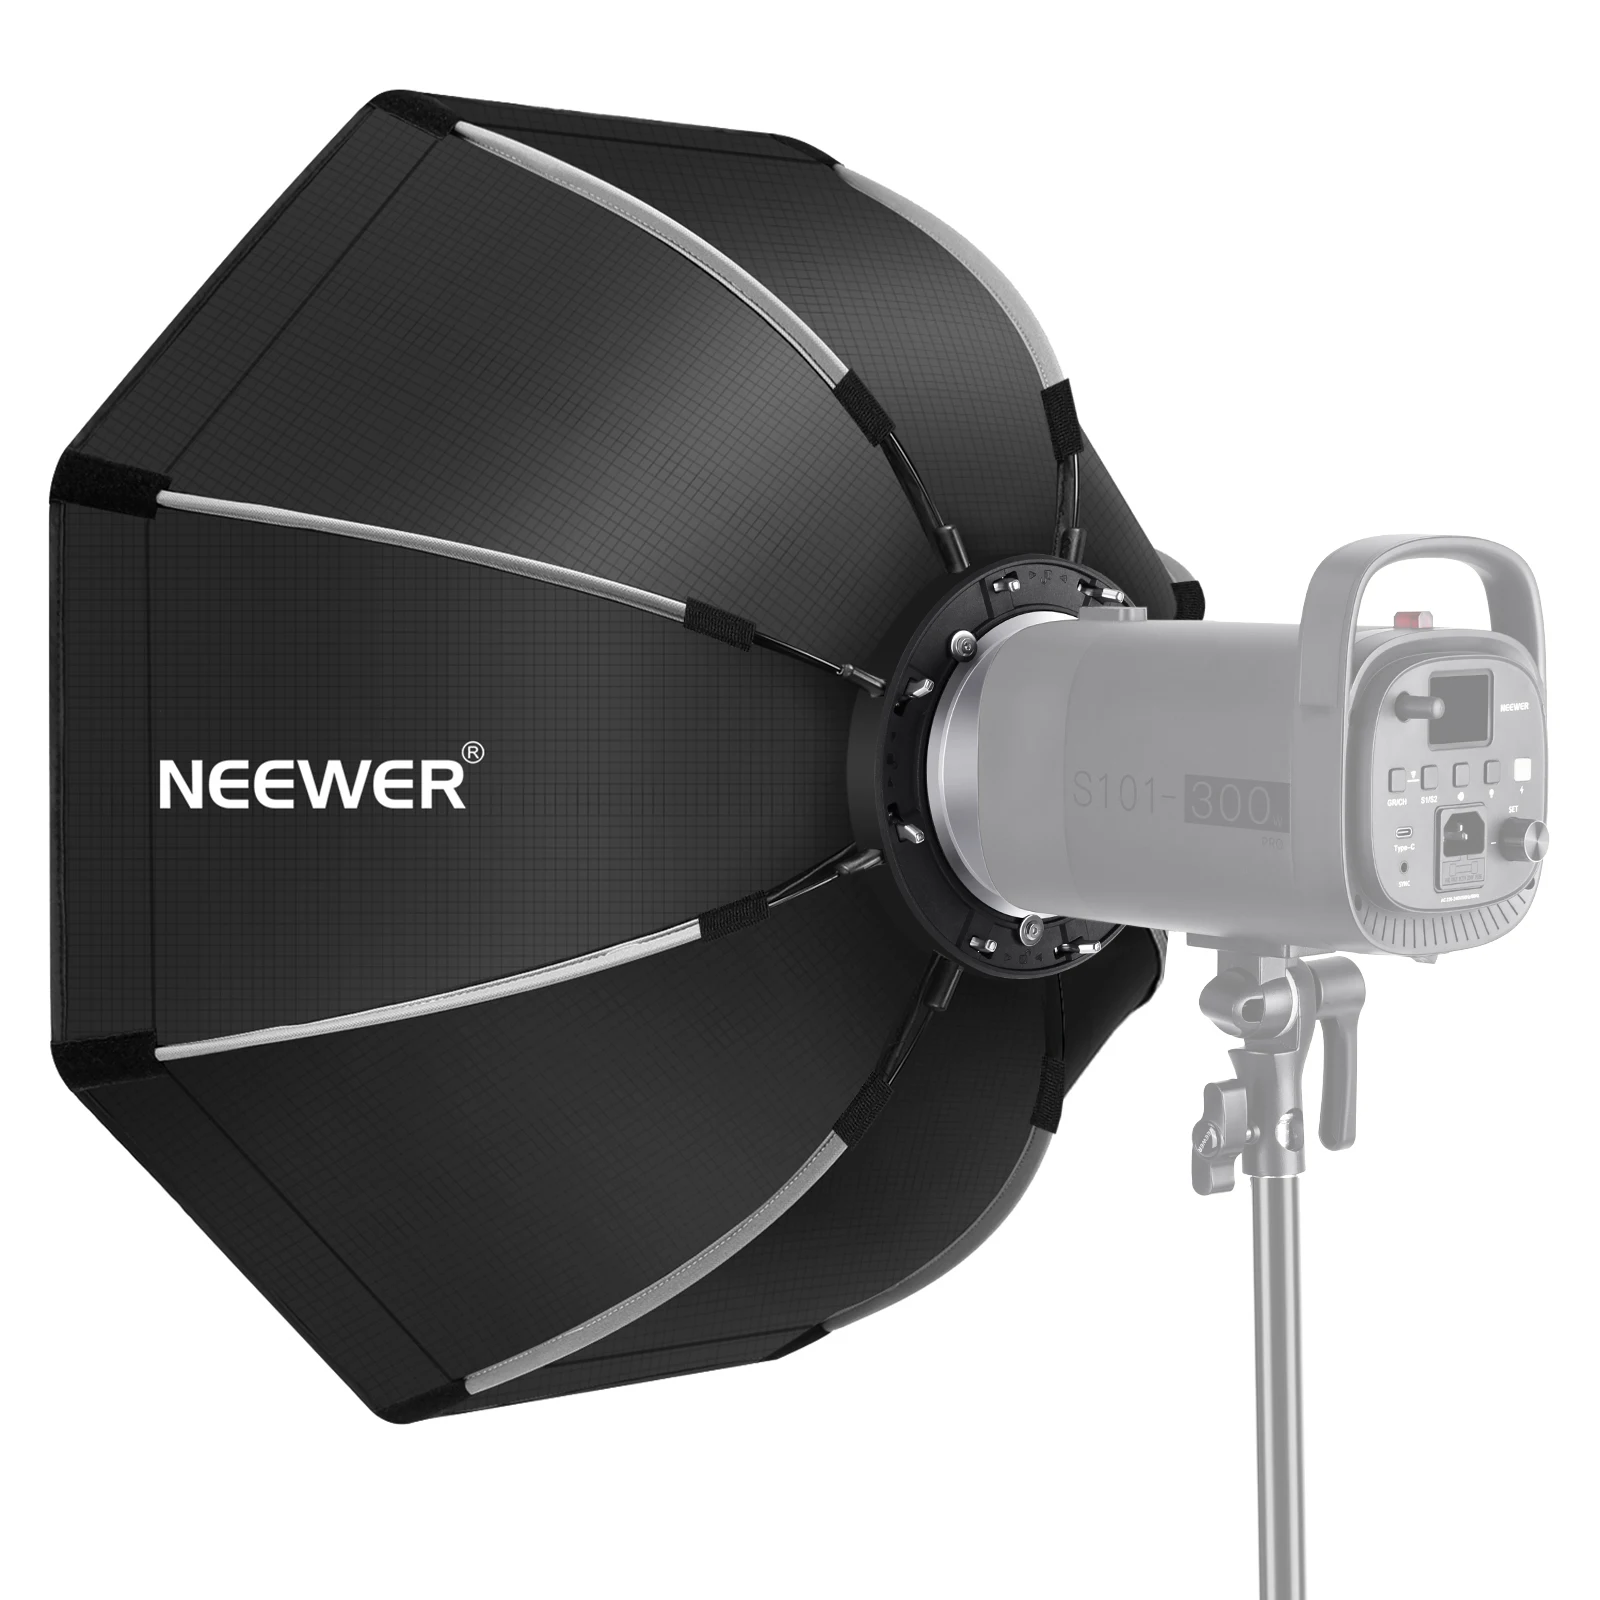 Neewer 35.4 inches/90 cm Octagonal Softbox ,Bowens Mount Speedring, Carrying Case for Speedlite Studio Flash Monolight,Portrait